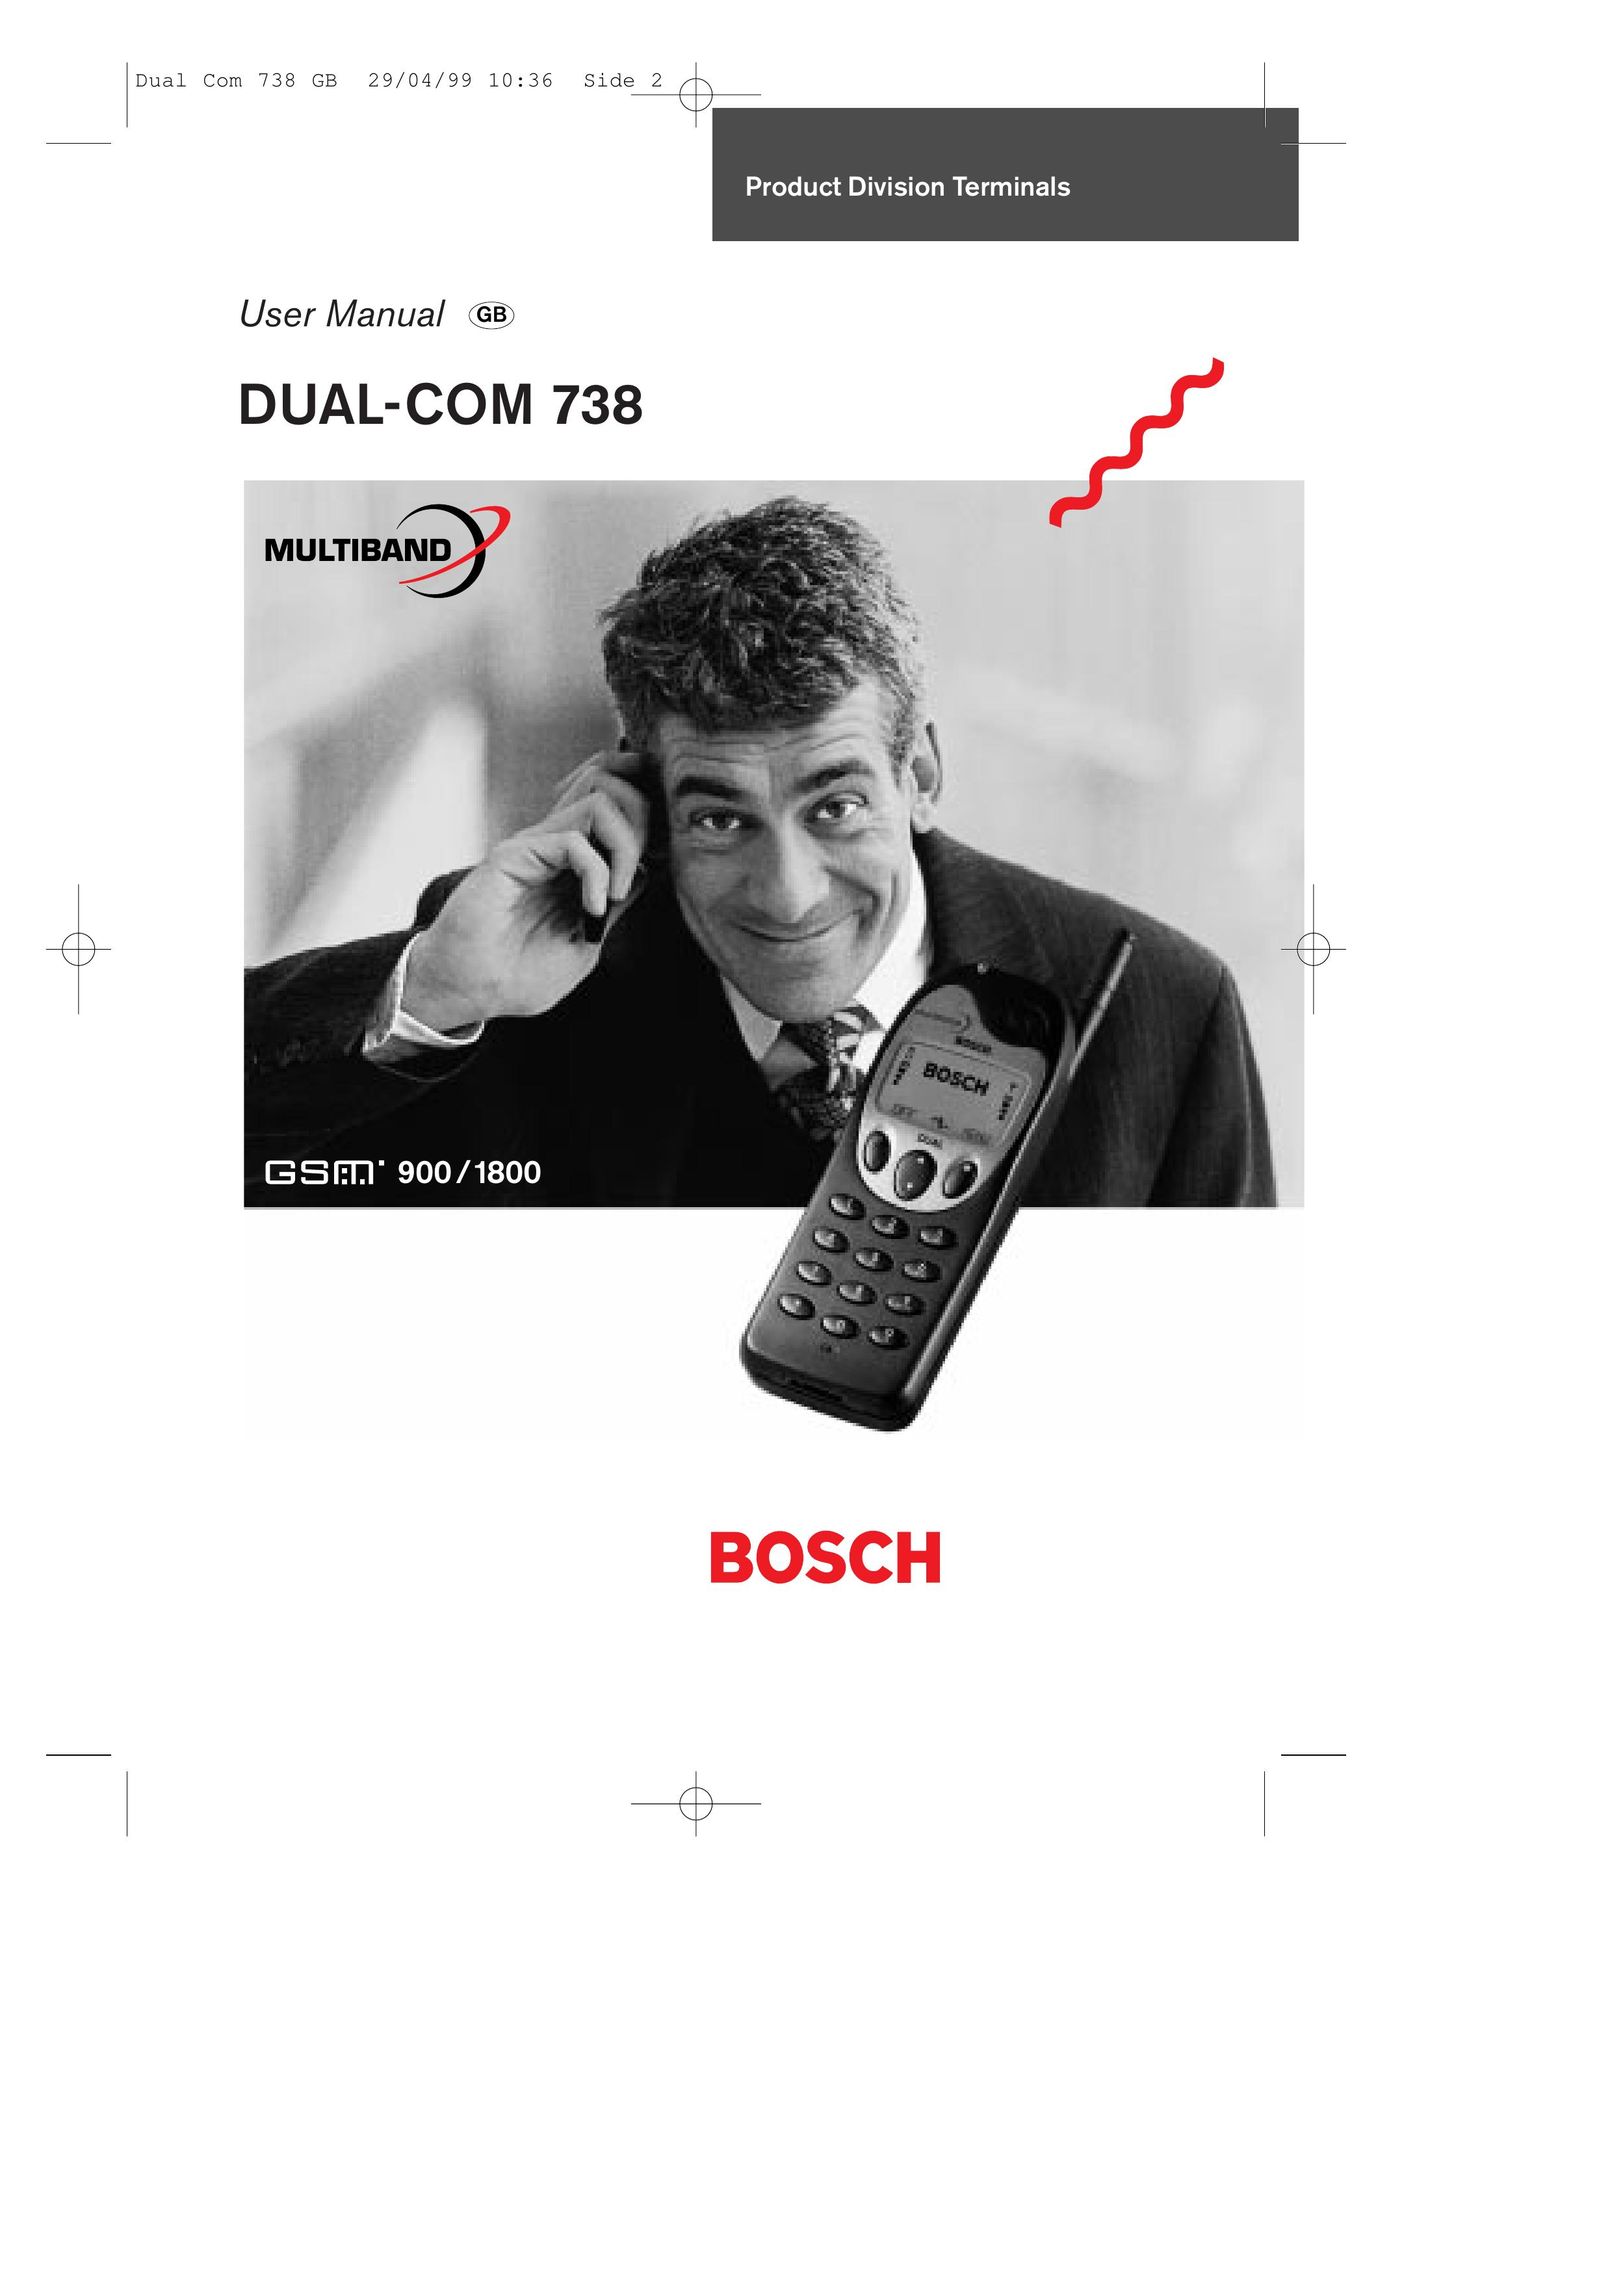 Bosch Appliances QSM 900 Cell Phone User Manual